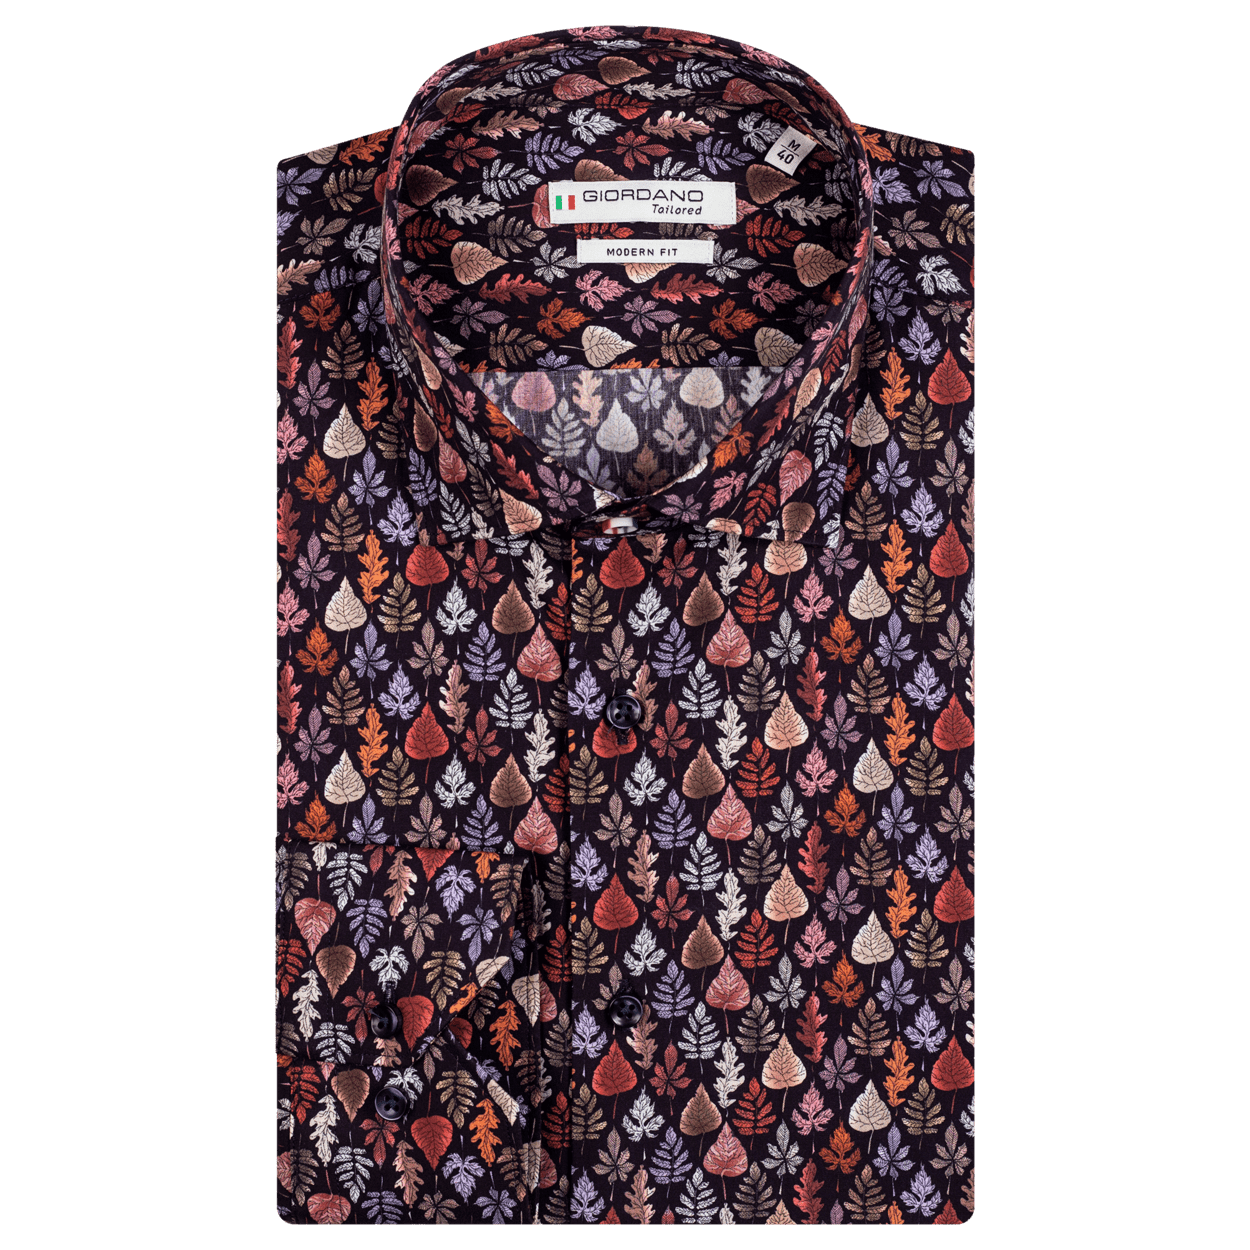 Fall Leaf Design' Men's T-Shirt